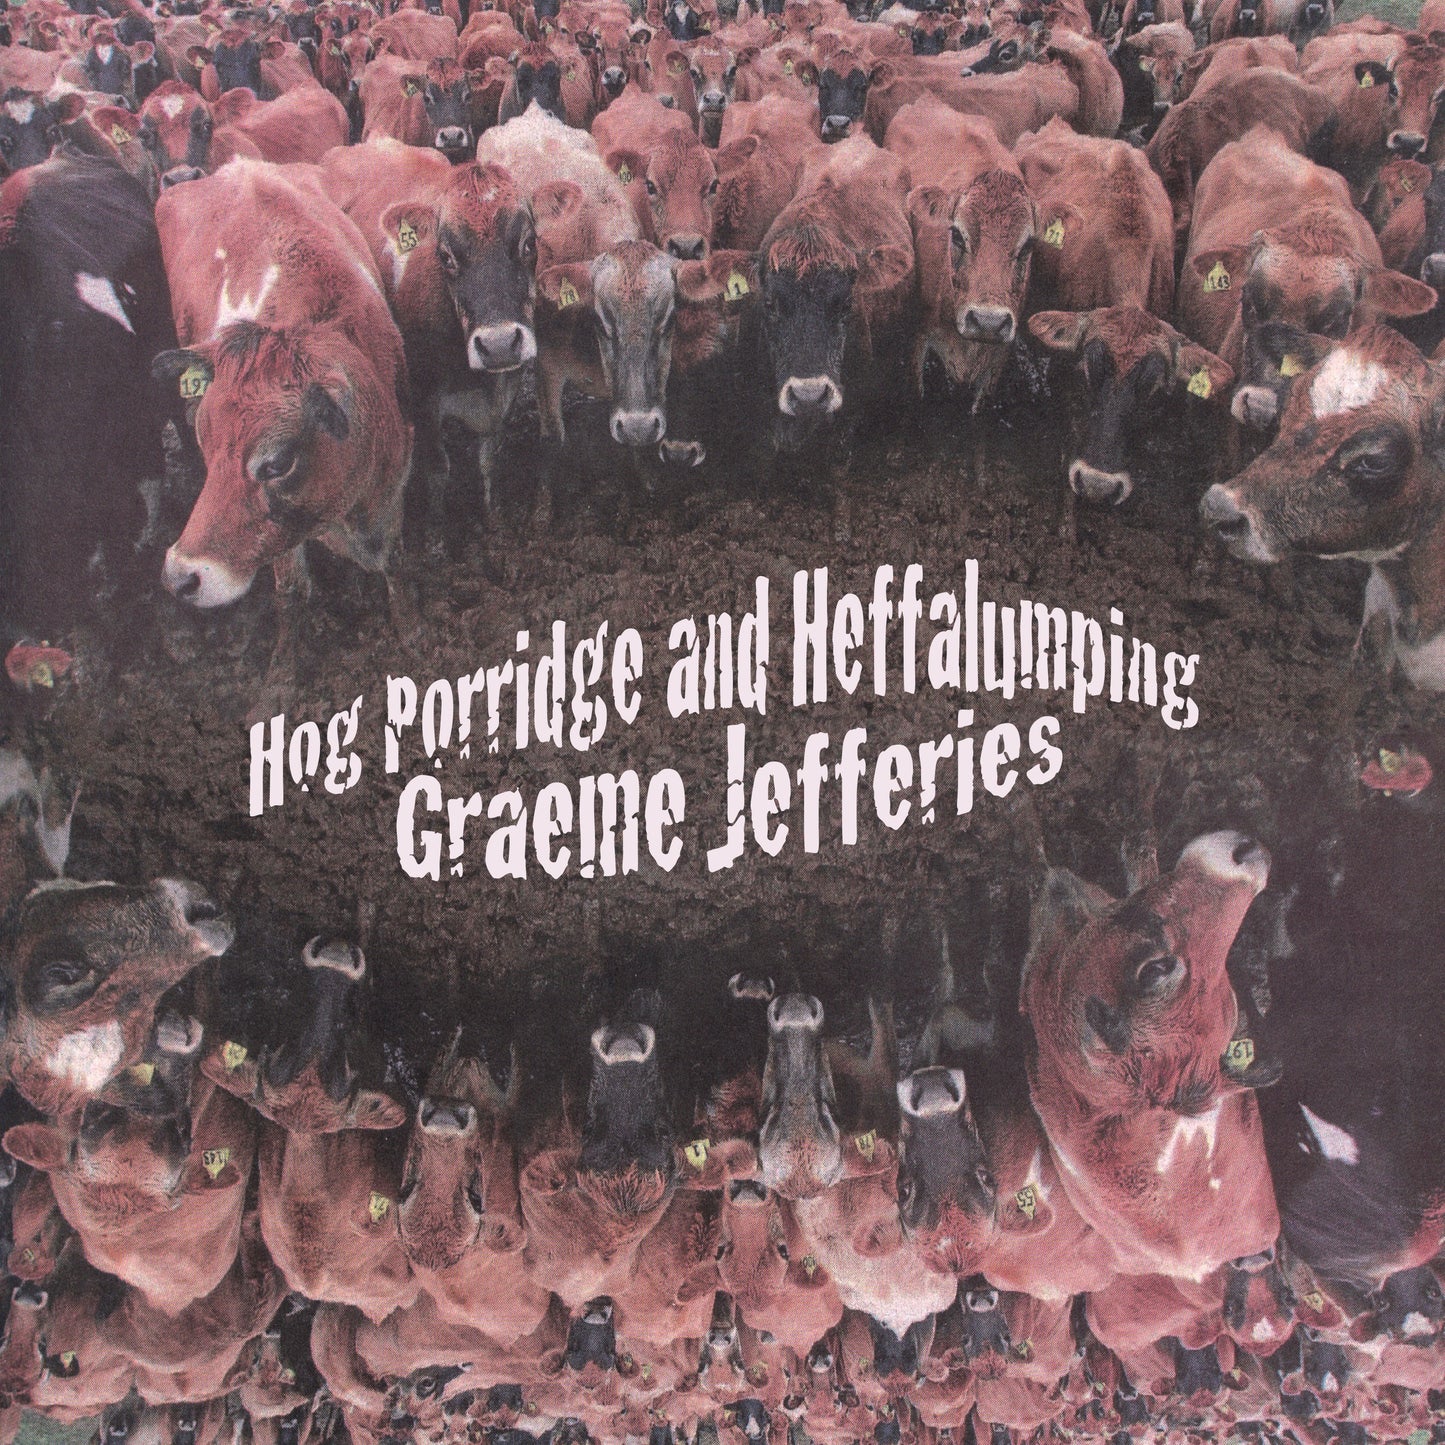 Graeme Jefferies - Hog Porridge and Heffalumping | Buy the Vinyl LP from Flying Nun Records